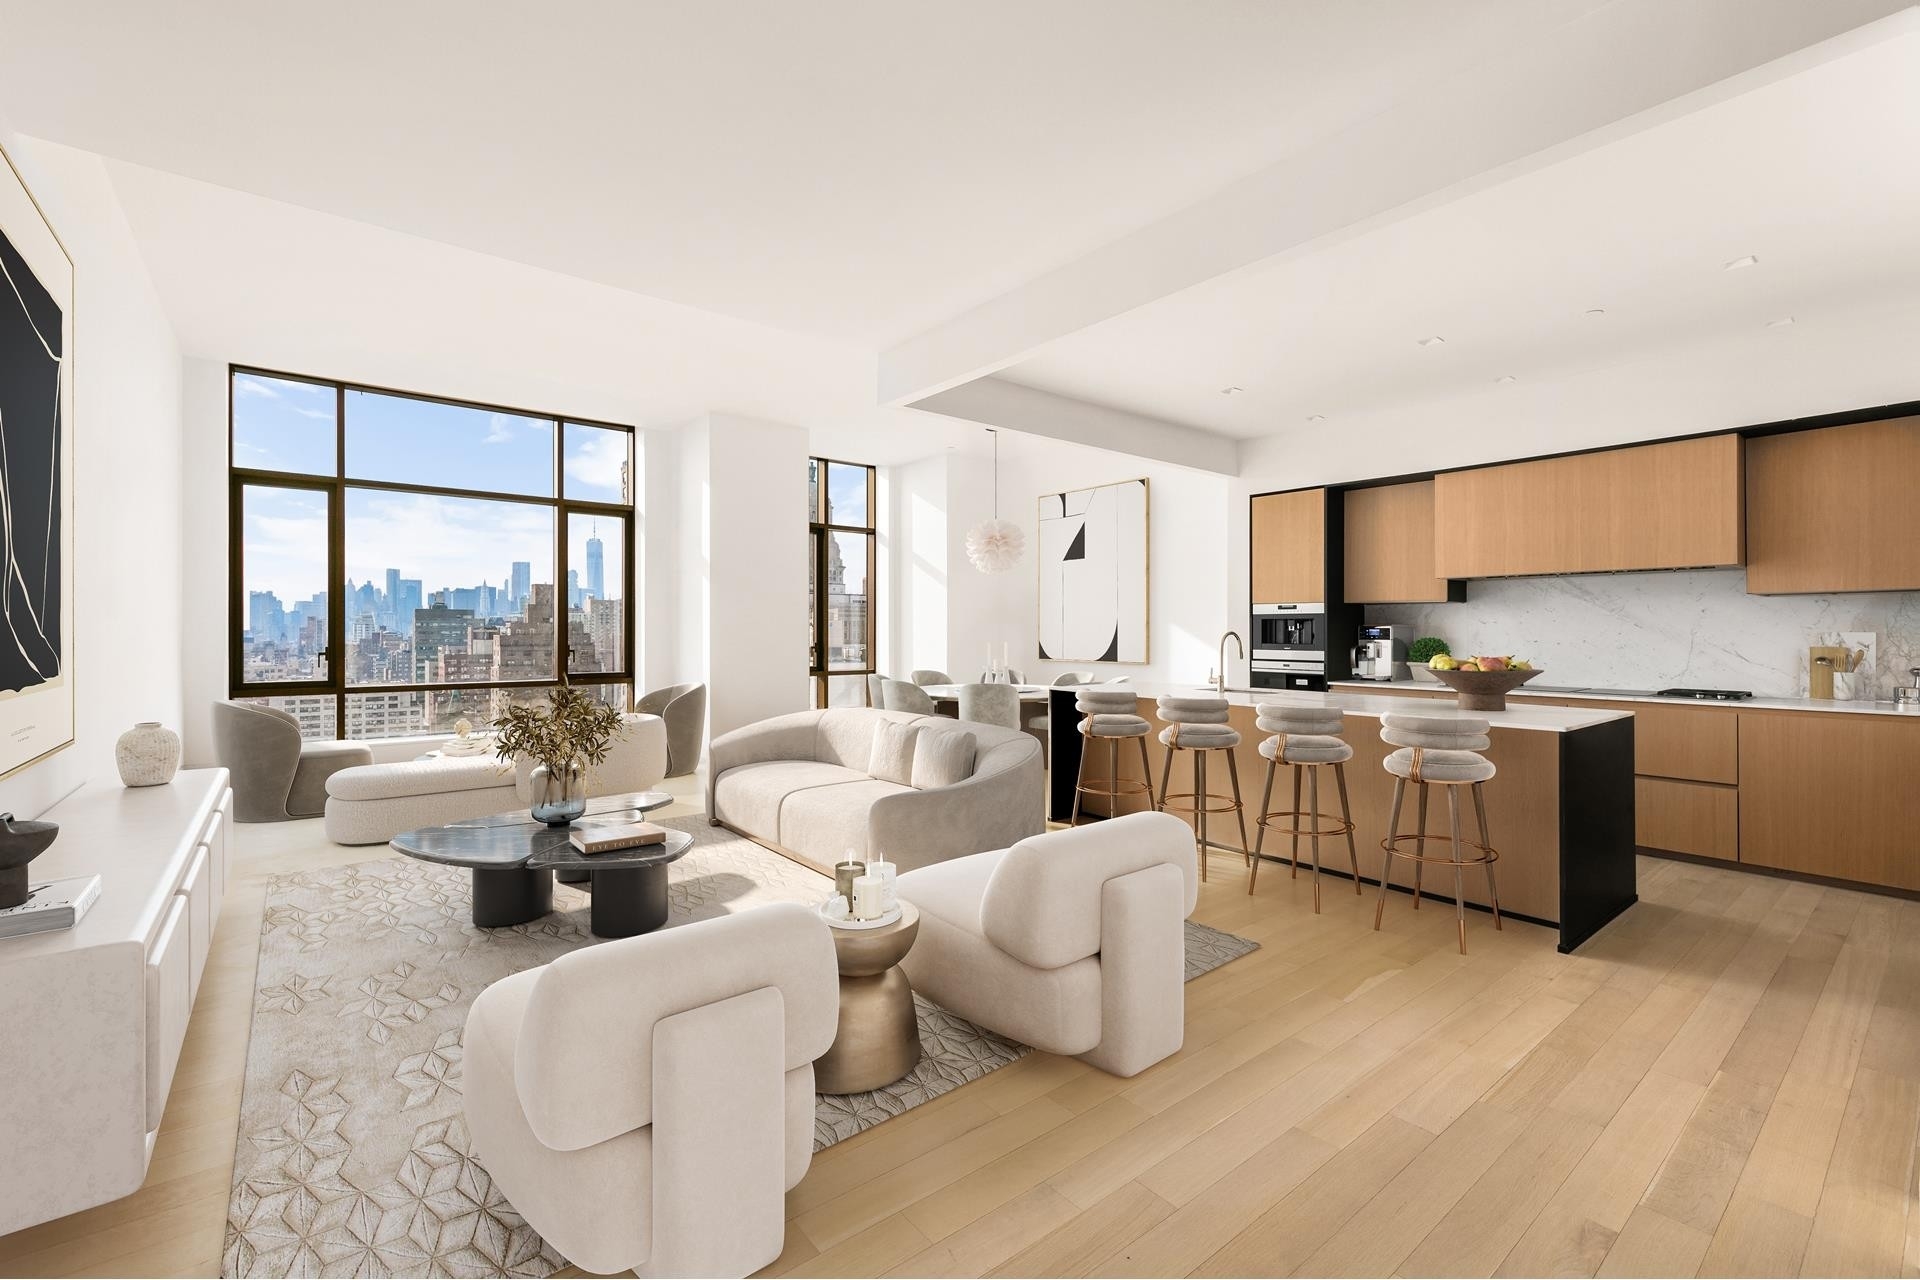 Condominium for Sale at Gramercy Square, 215 E 19TH ST, 17A Gramercy Park, New York, New York 10003